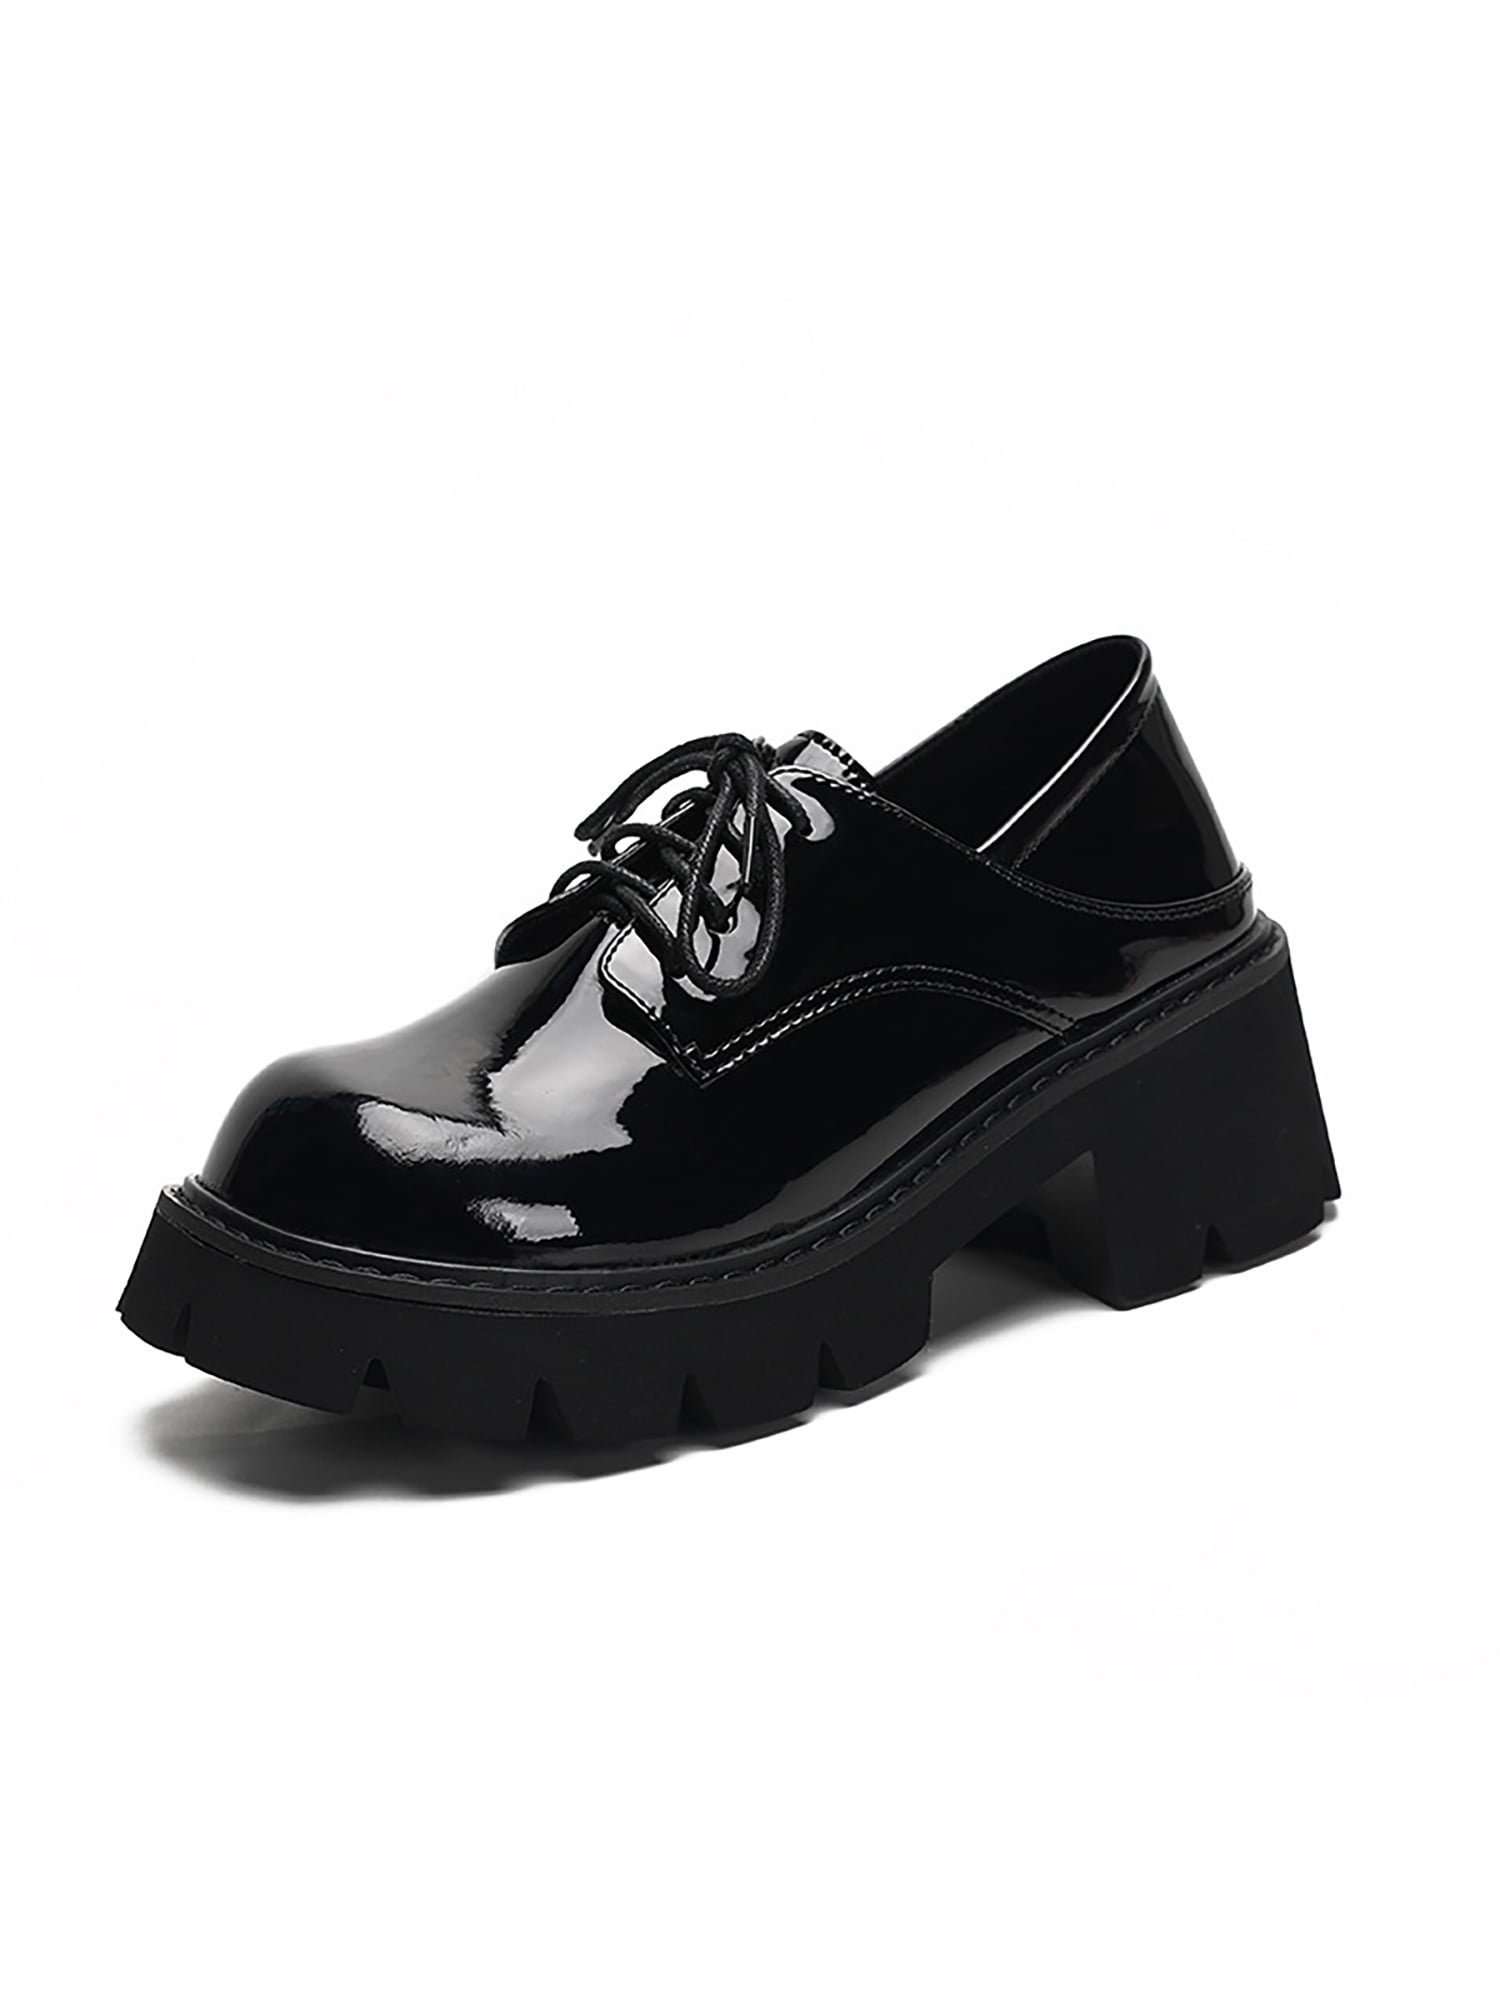 Woobling Ladies Anti-Slip Lug Sole Chunky Platform Loafer Casual Oxford Leather Shoes Platform Loafer Black - Walmart.com